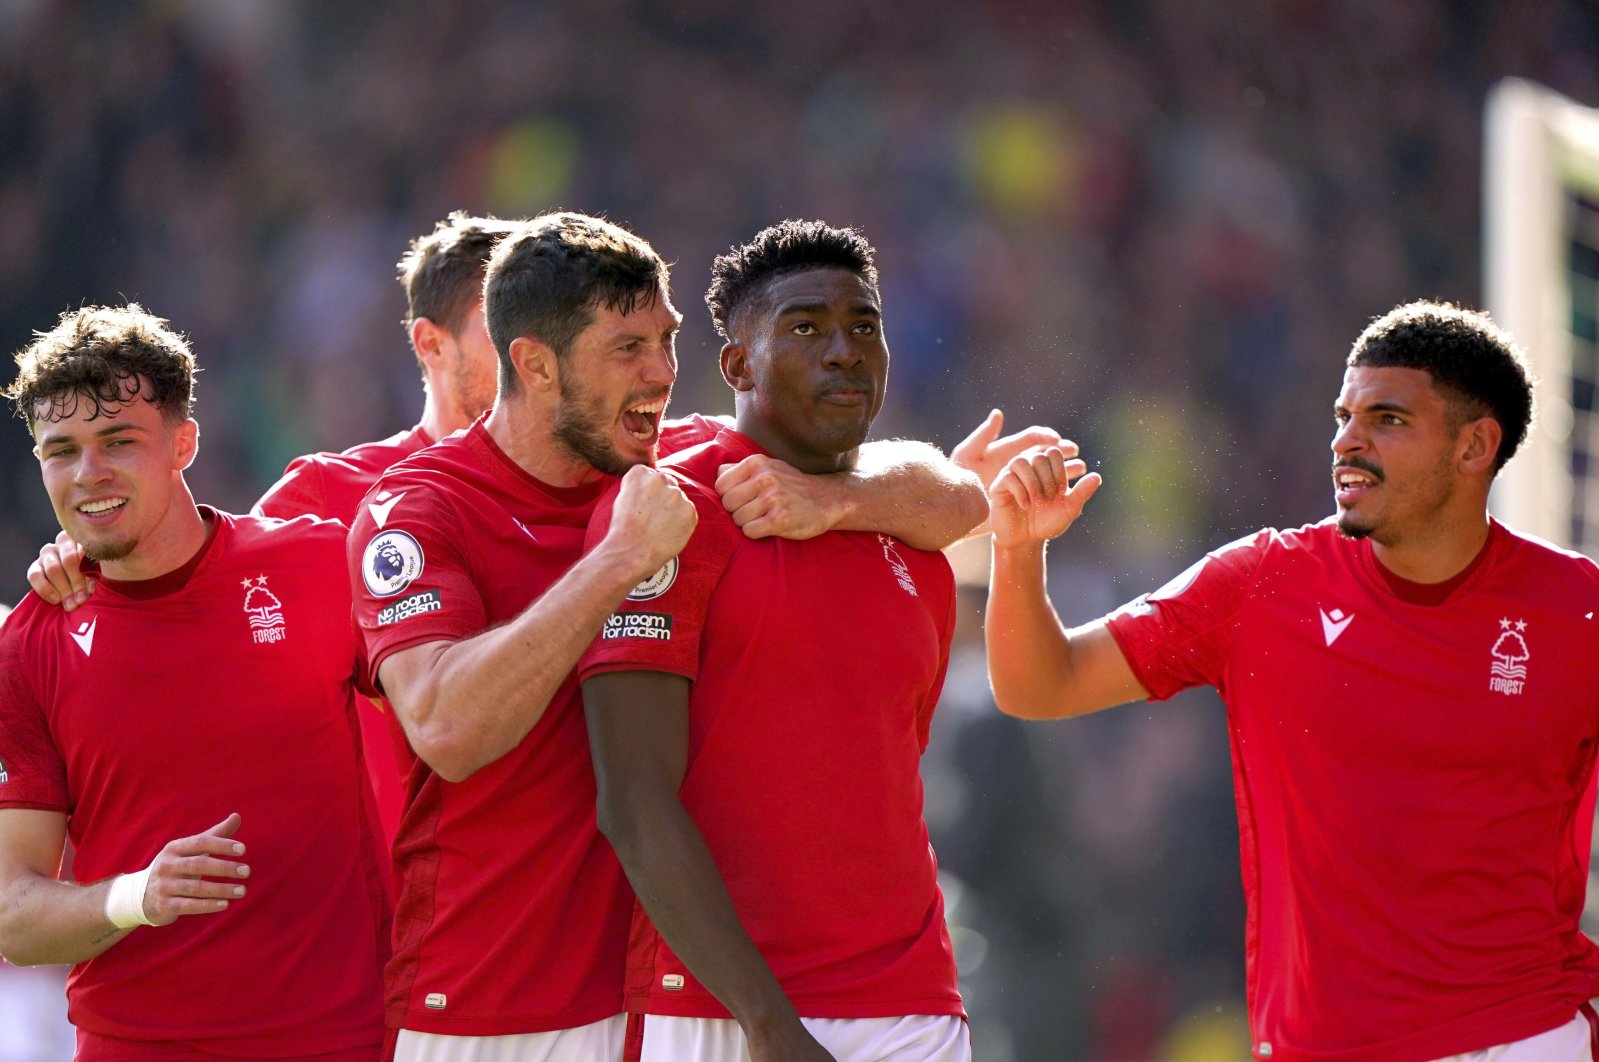 Nottingham Forest players celebrate a goal in a Premier League match against Liverpool, Nottingham, the U.K., Oct. 22, 2022. (AP Photo)